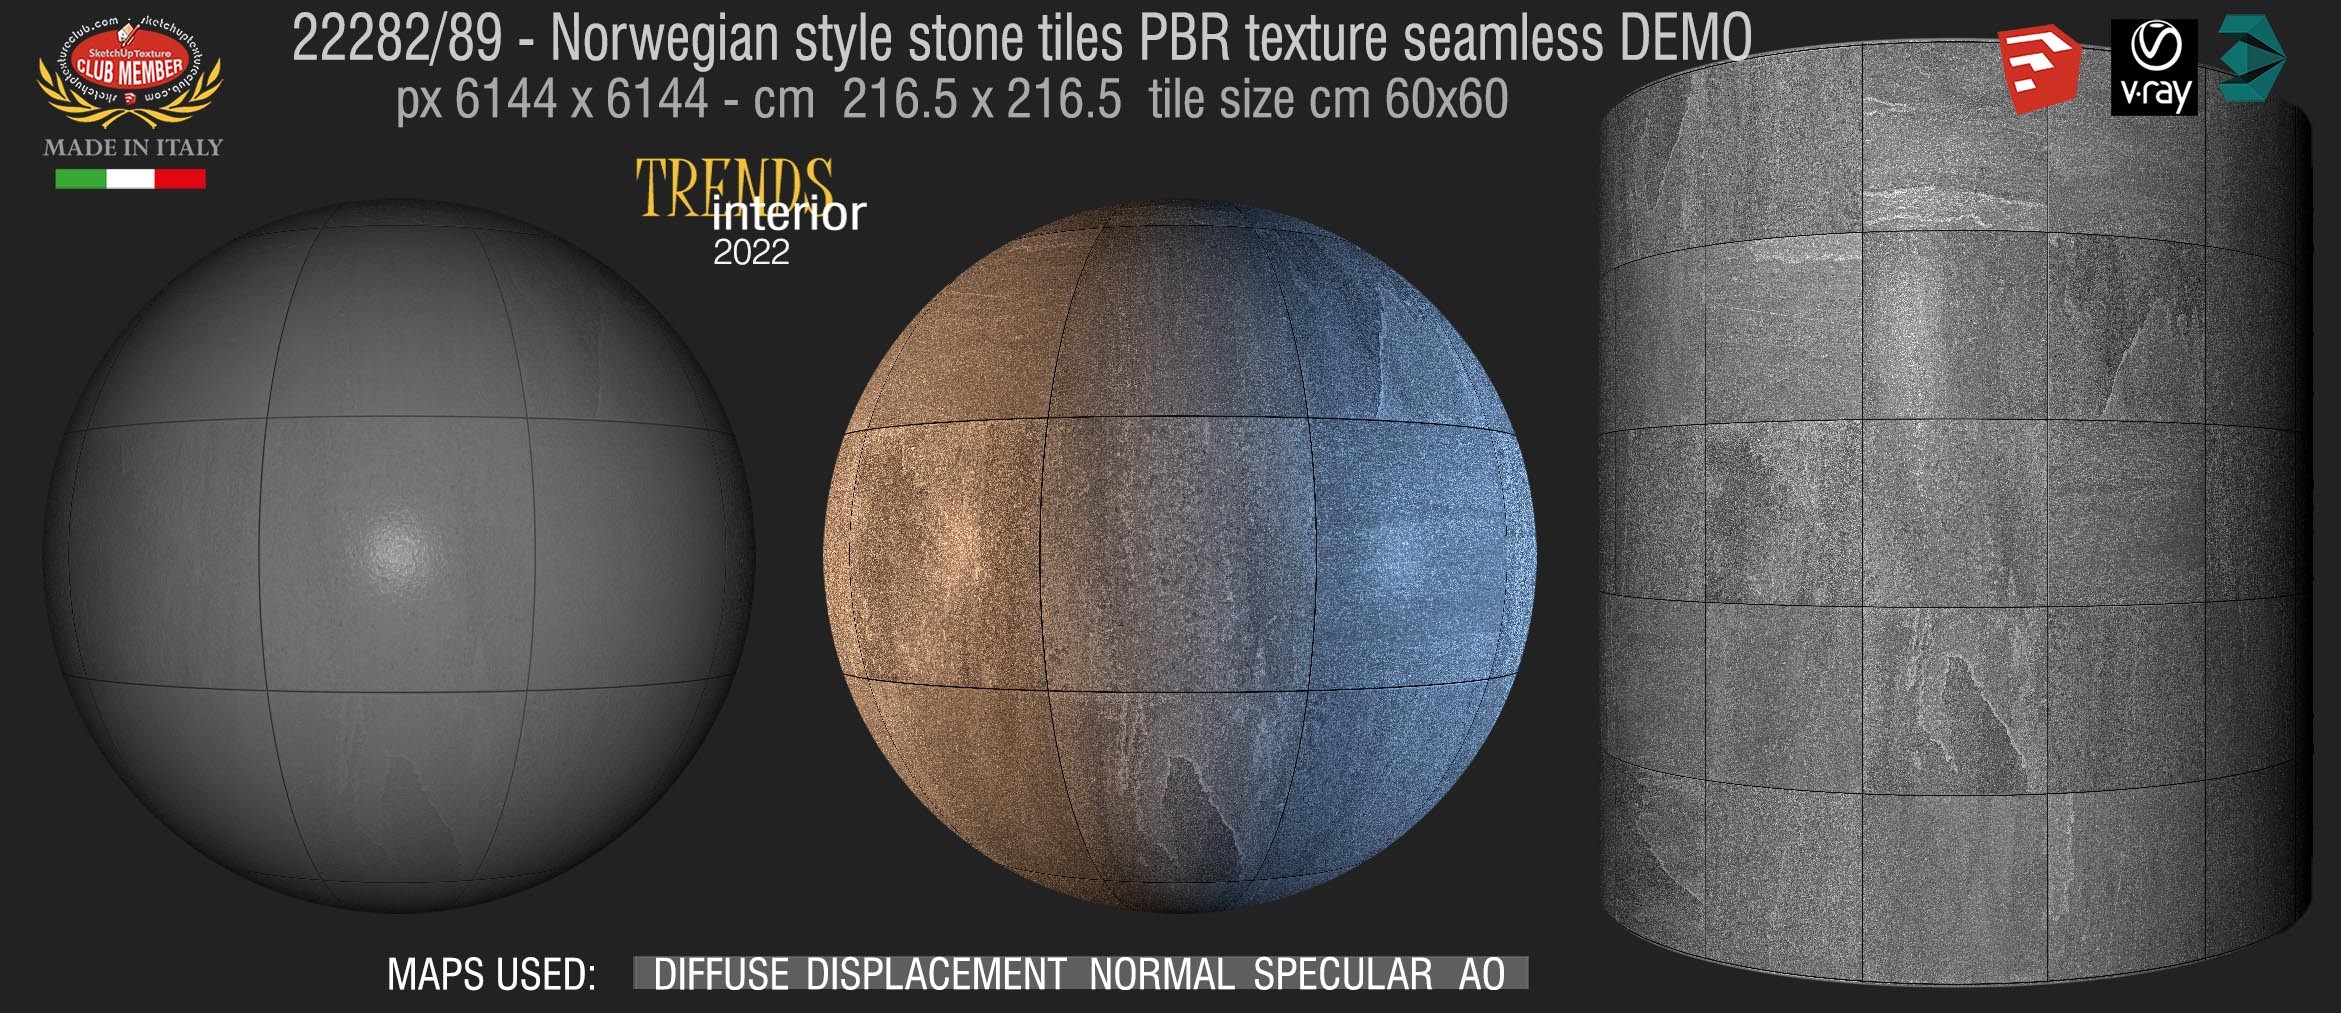 22282_89_Norwegian style stone tiles PBR texture seamless DEMO